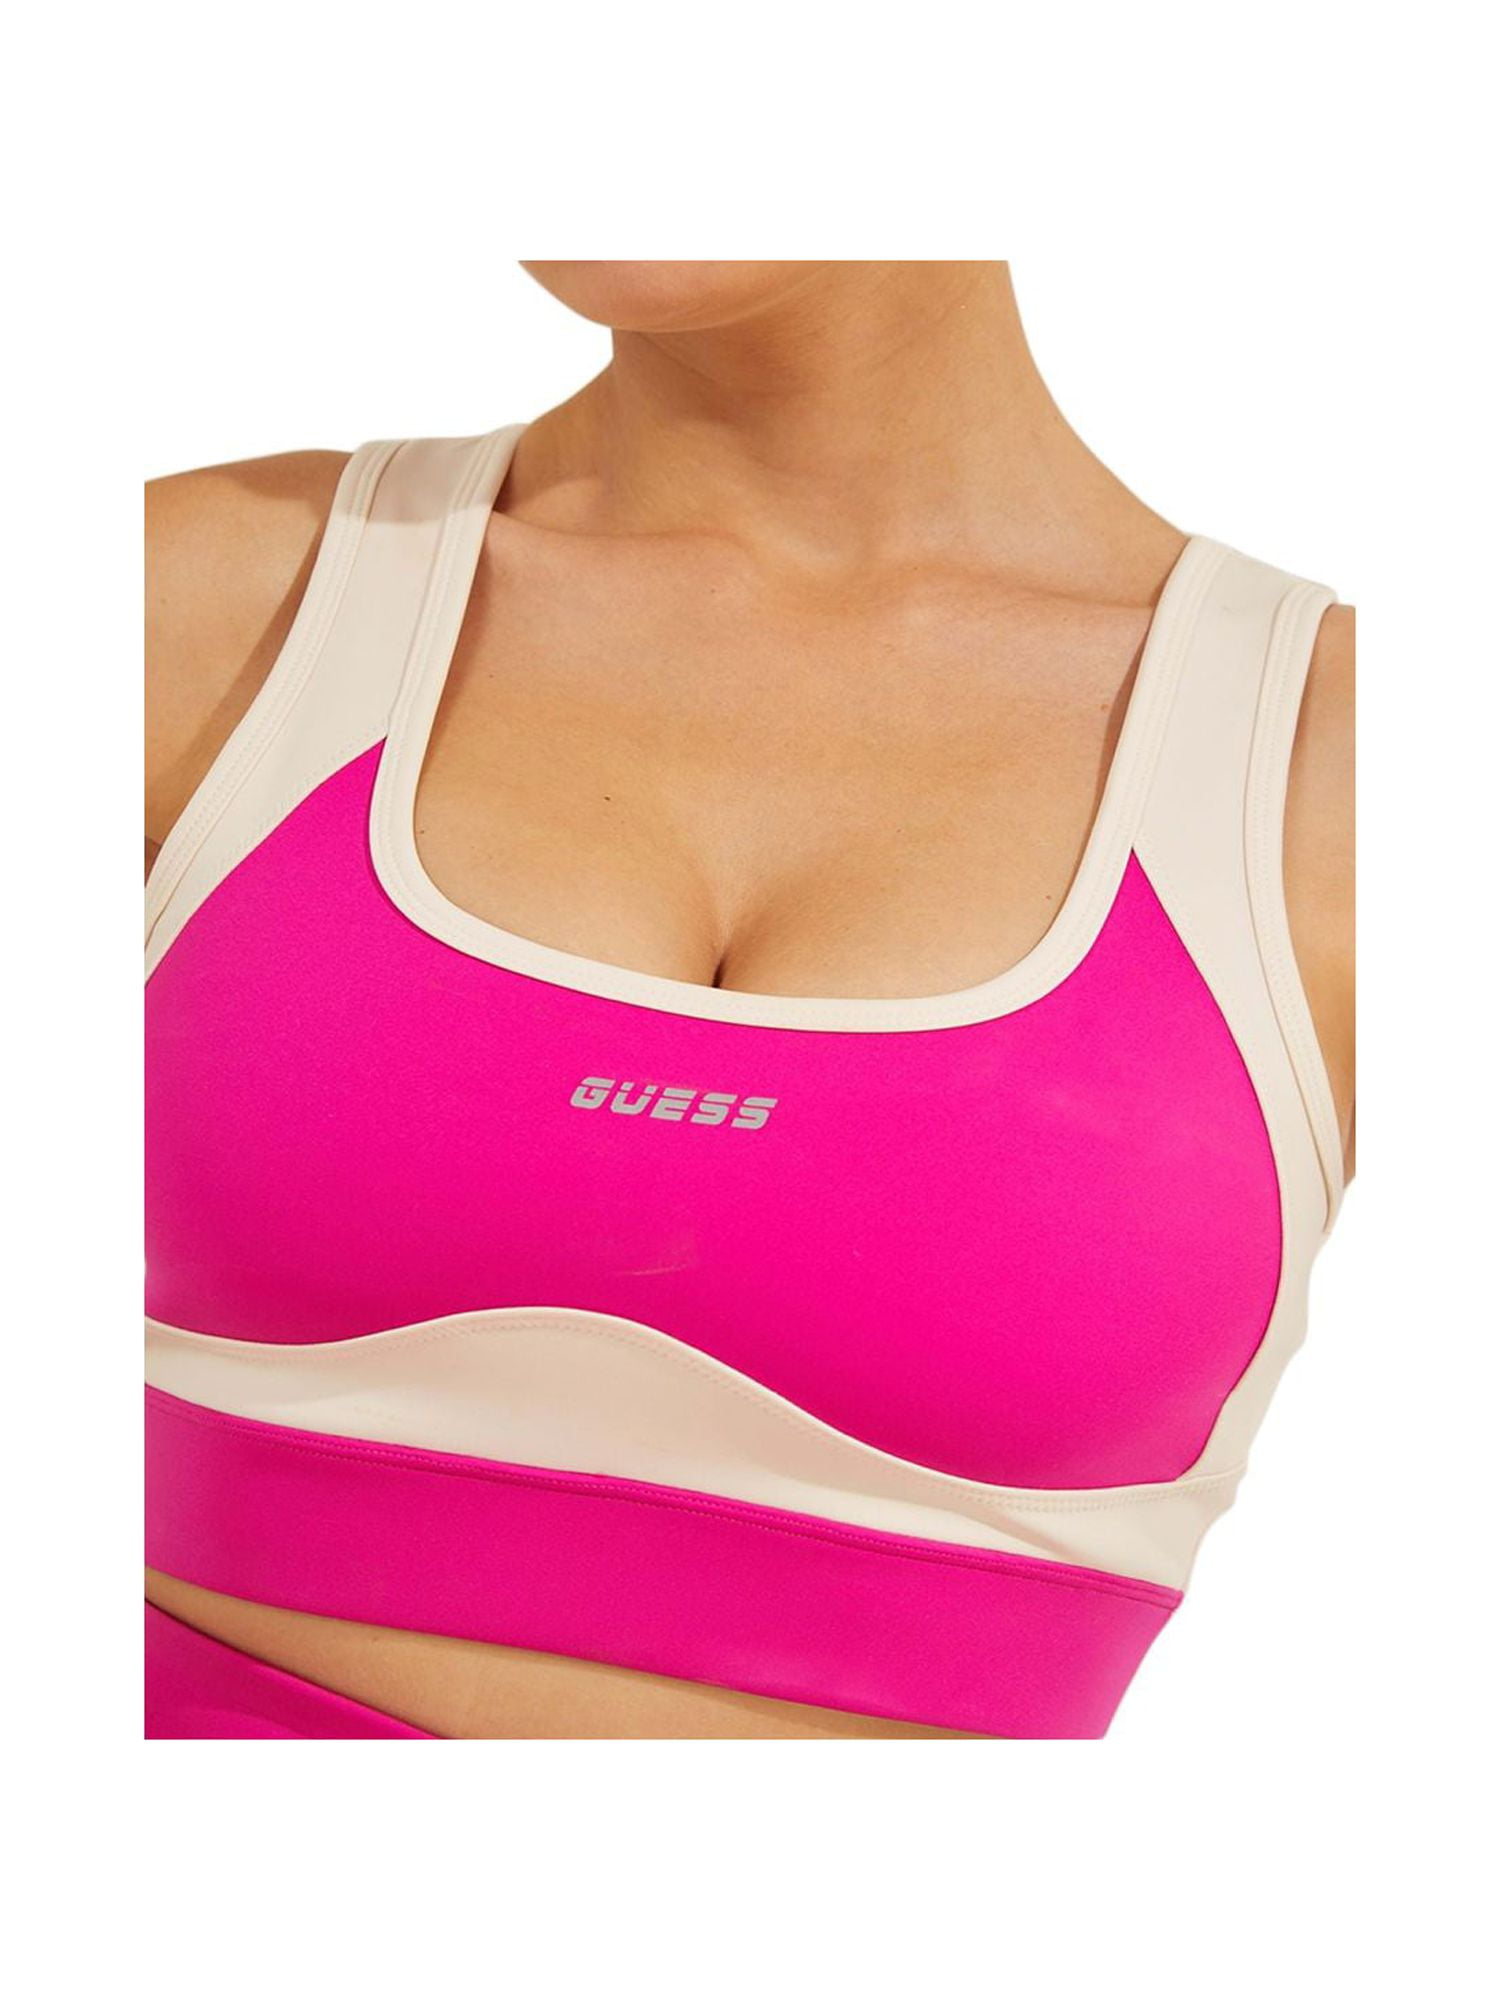 GUESS Intimates Pink Compression Cutouts at back Square neckline Sports Bra  L 